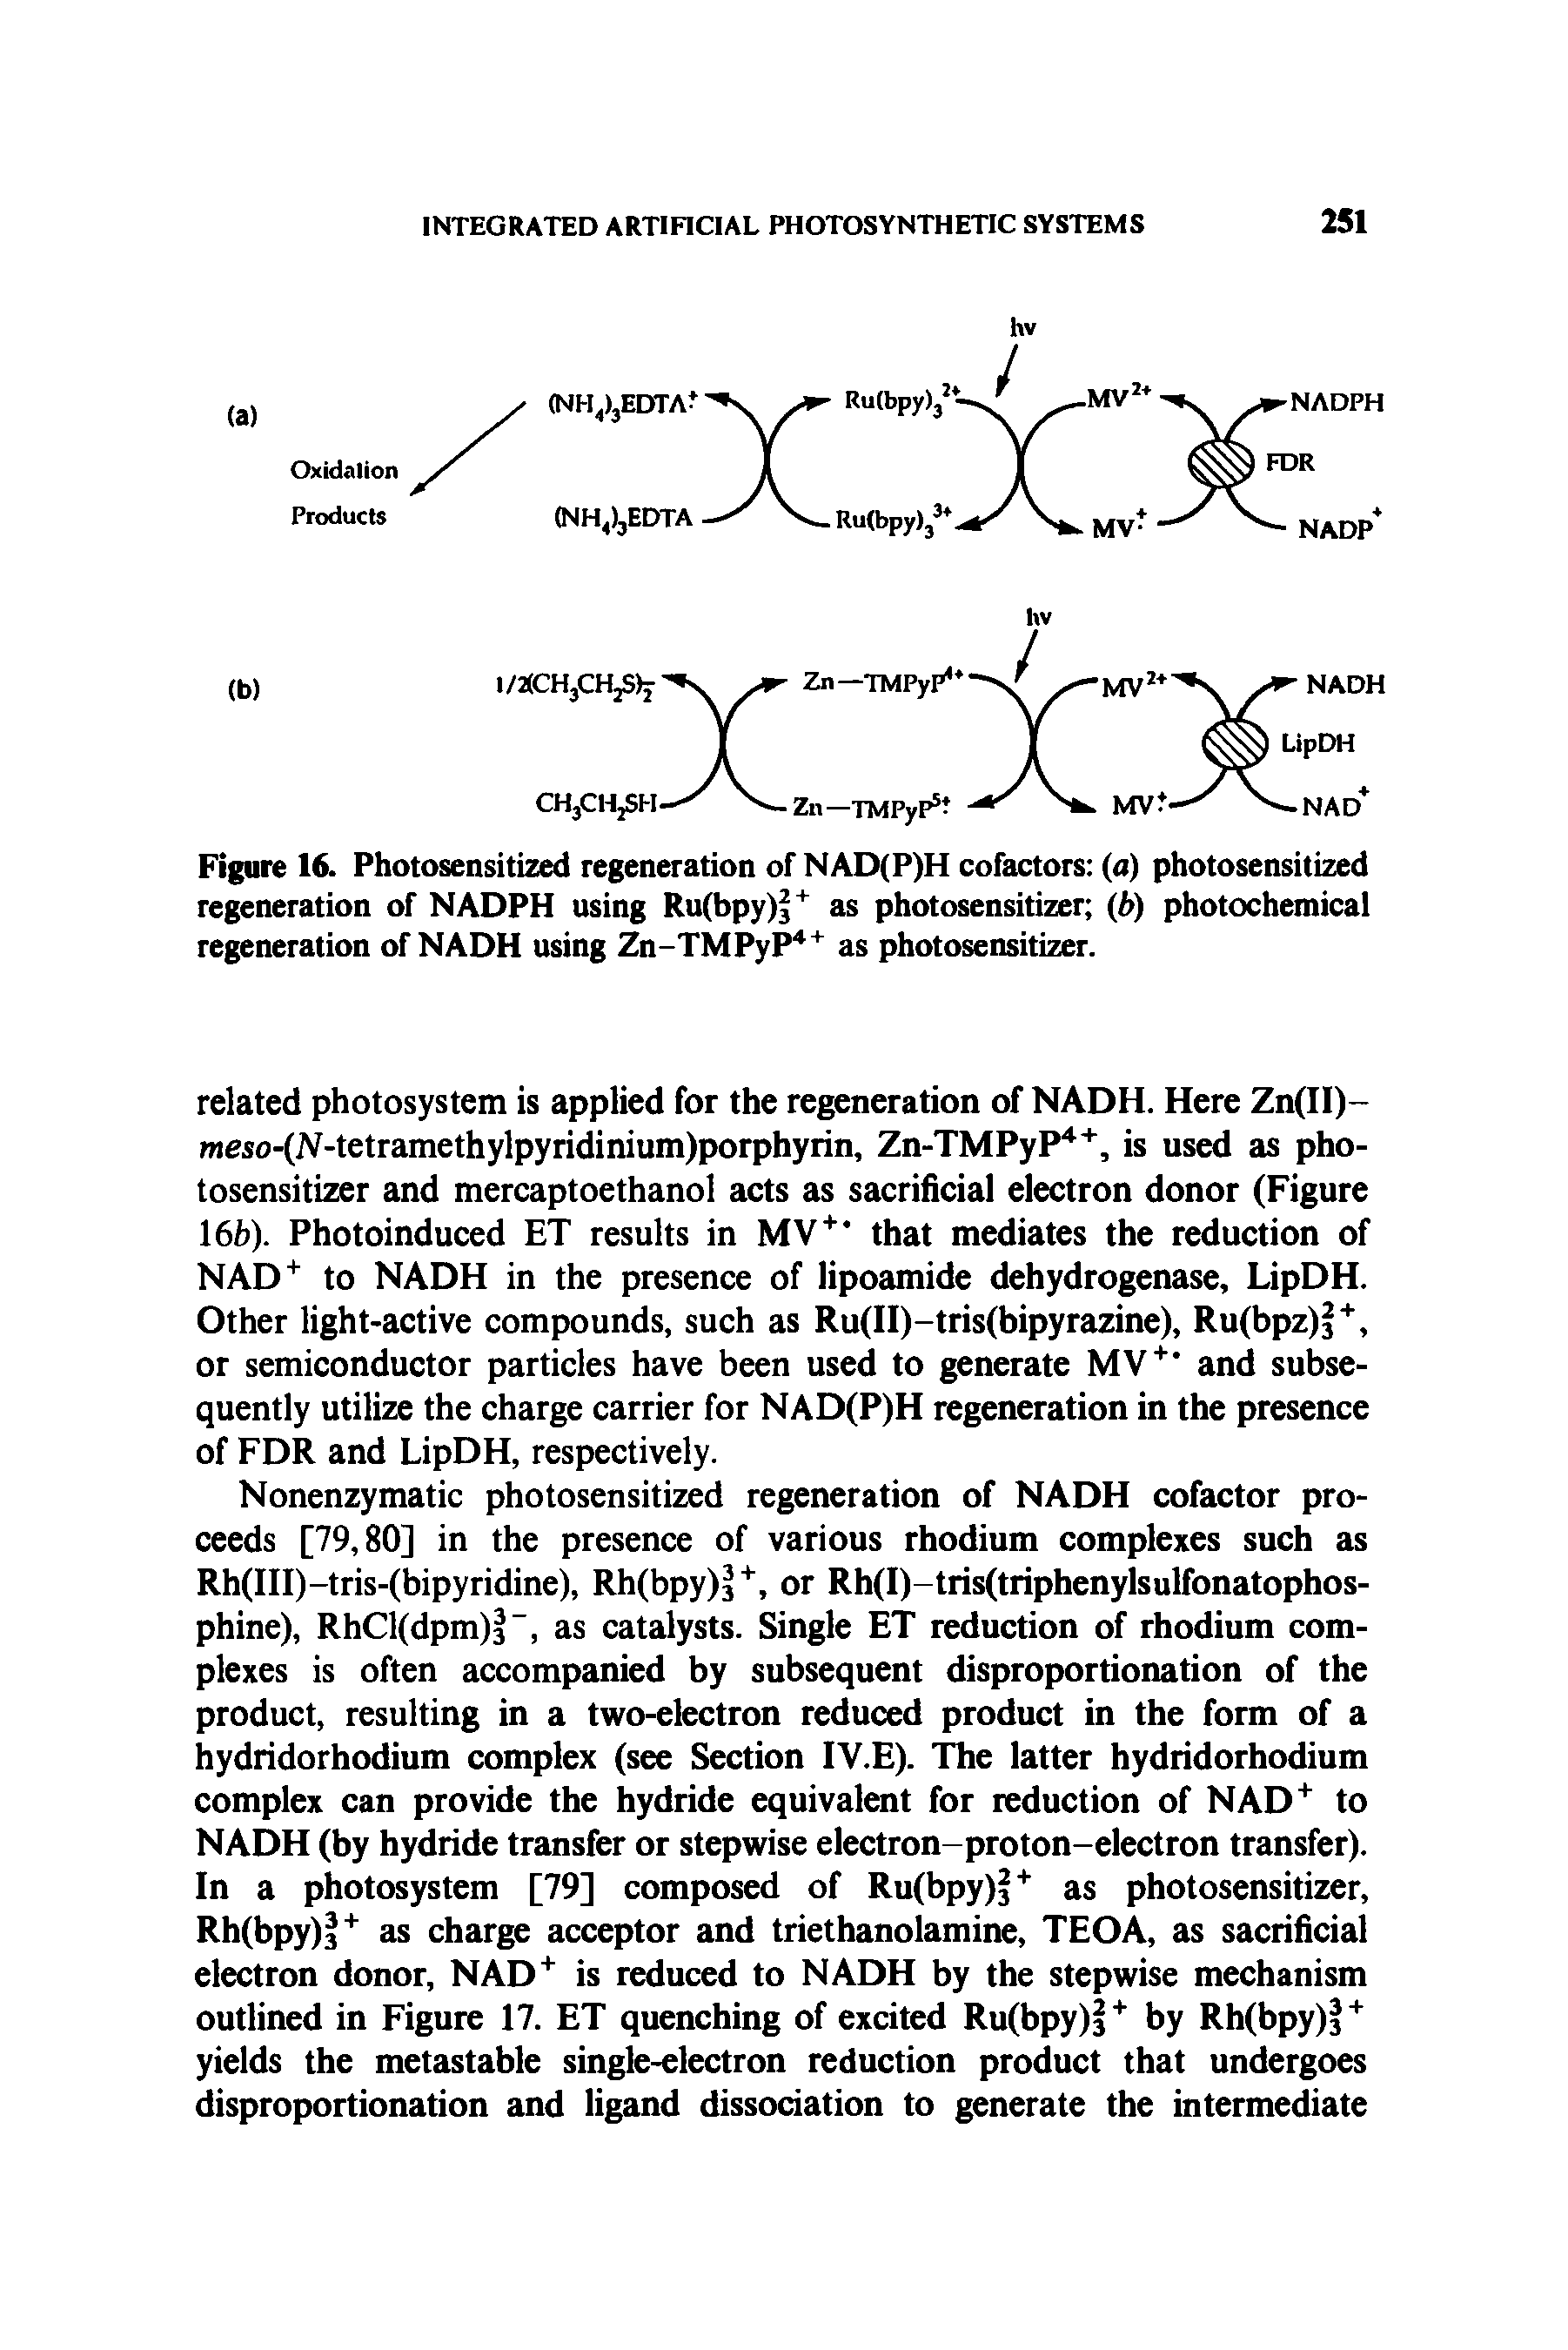 Figure 16. Photosensitized regeneration of NAD(P)H cofactors (a) photosensitized regeneration of NADPH using Ru(bpy) as photosensitizer (b) photochemical regeneration of NADH using Zn-TMPyP as photosensitizer.